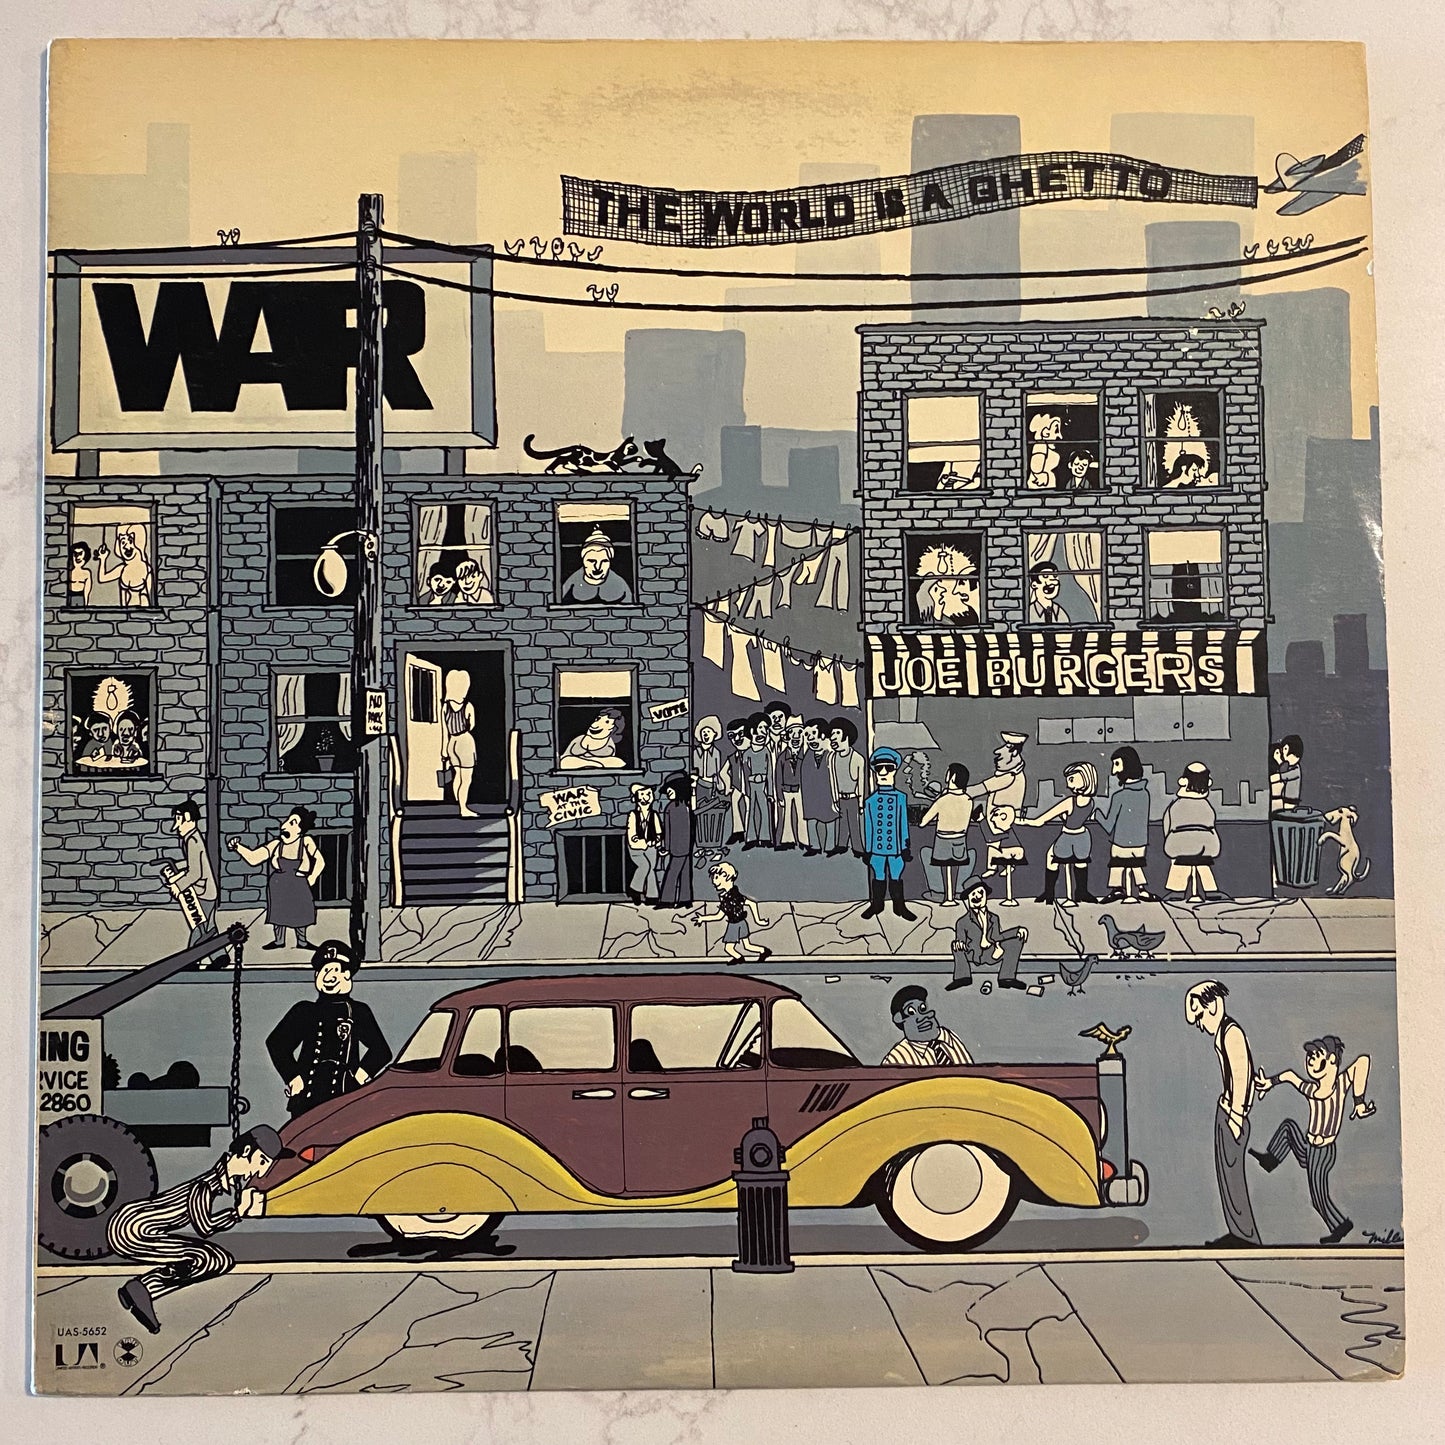 War - The World Is A Ghetto (LP, Album)